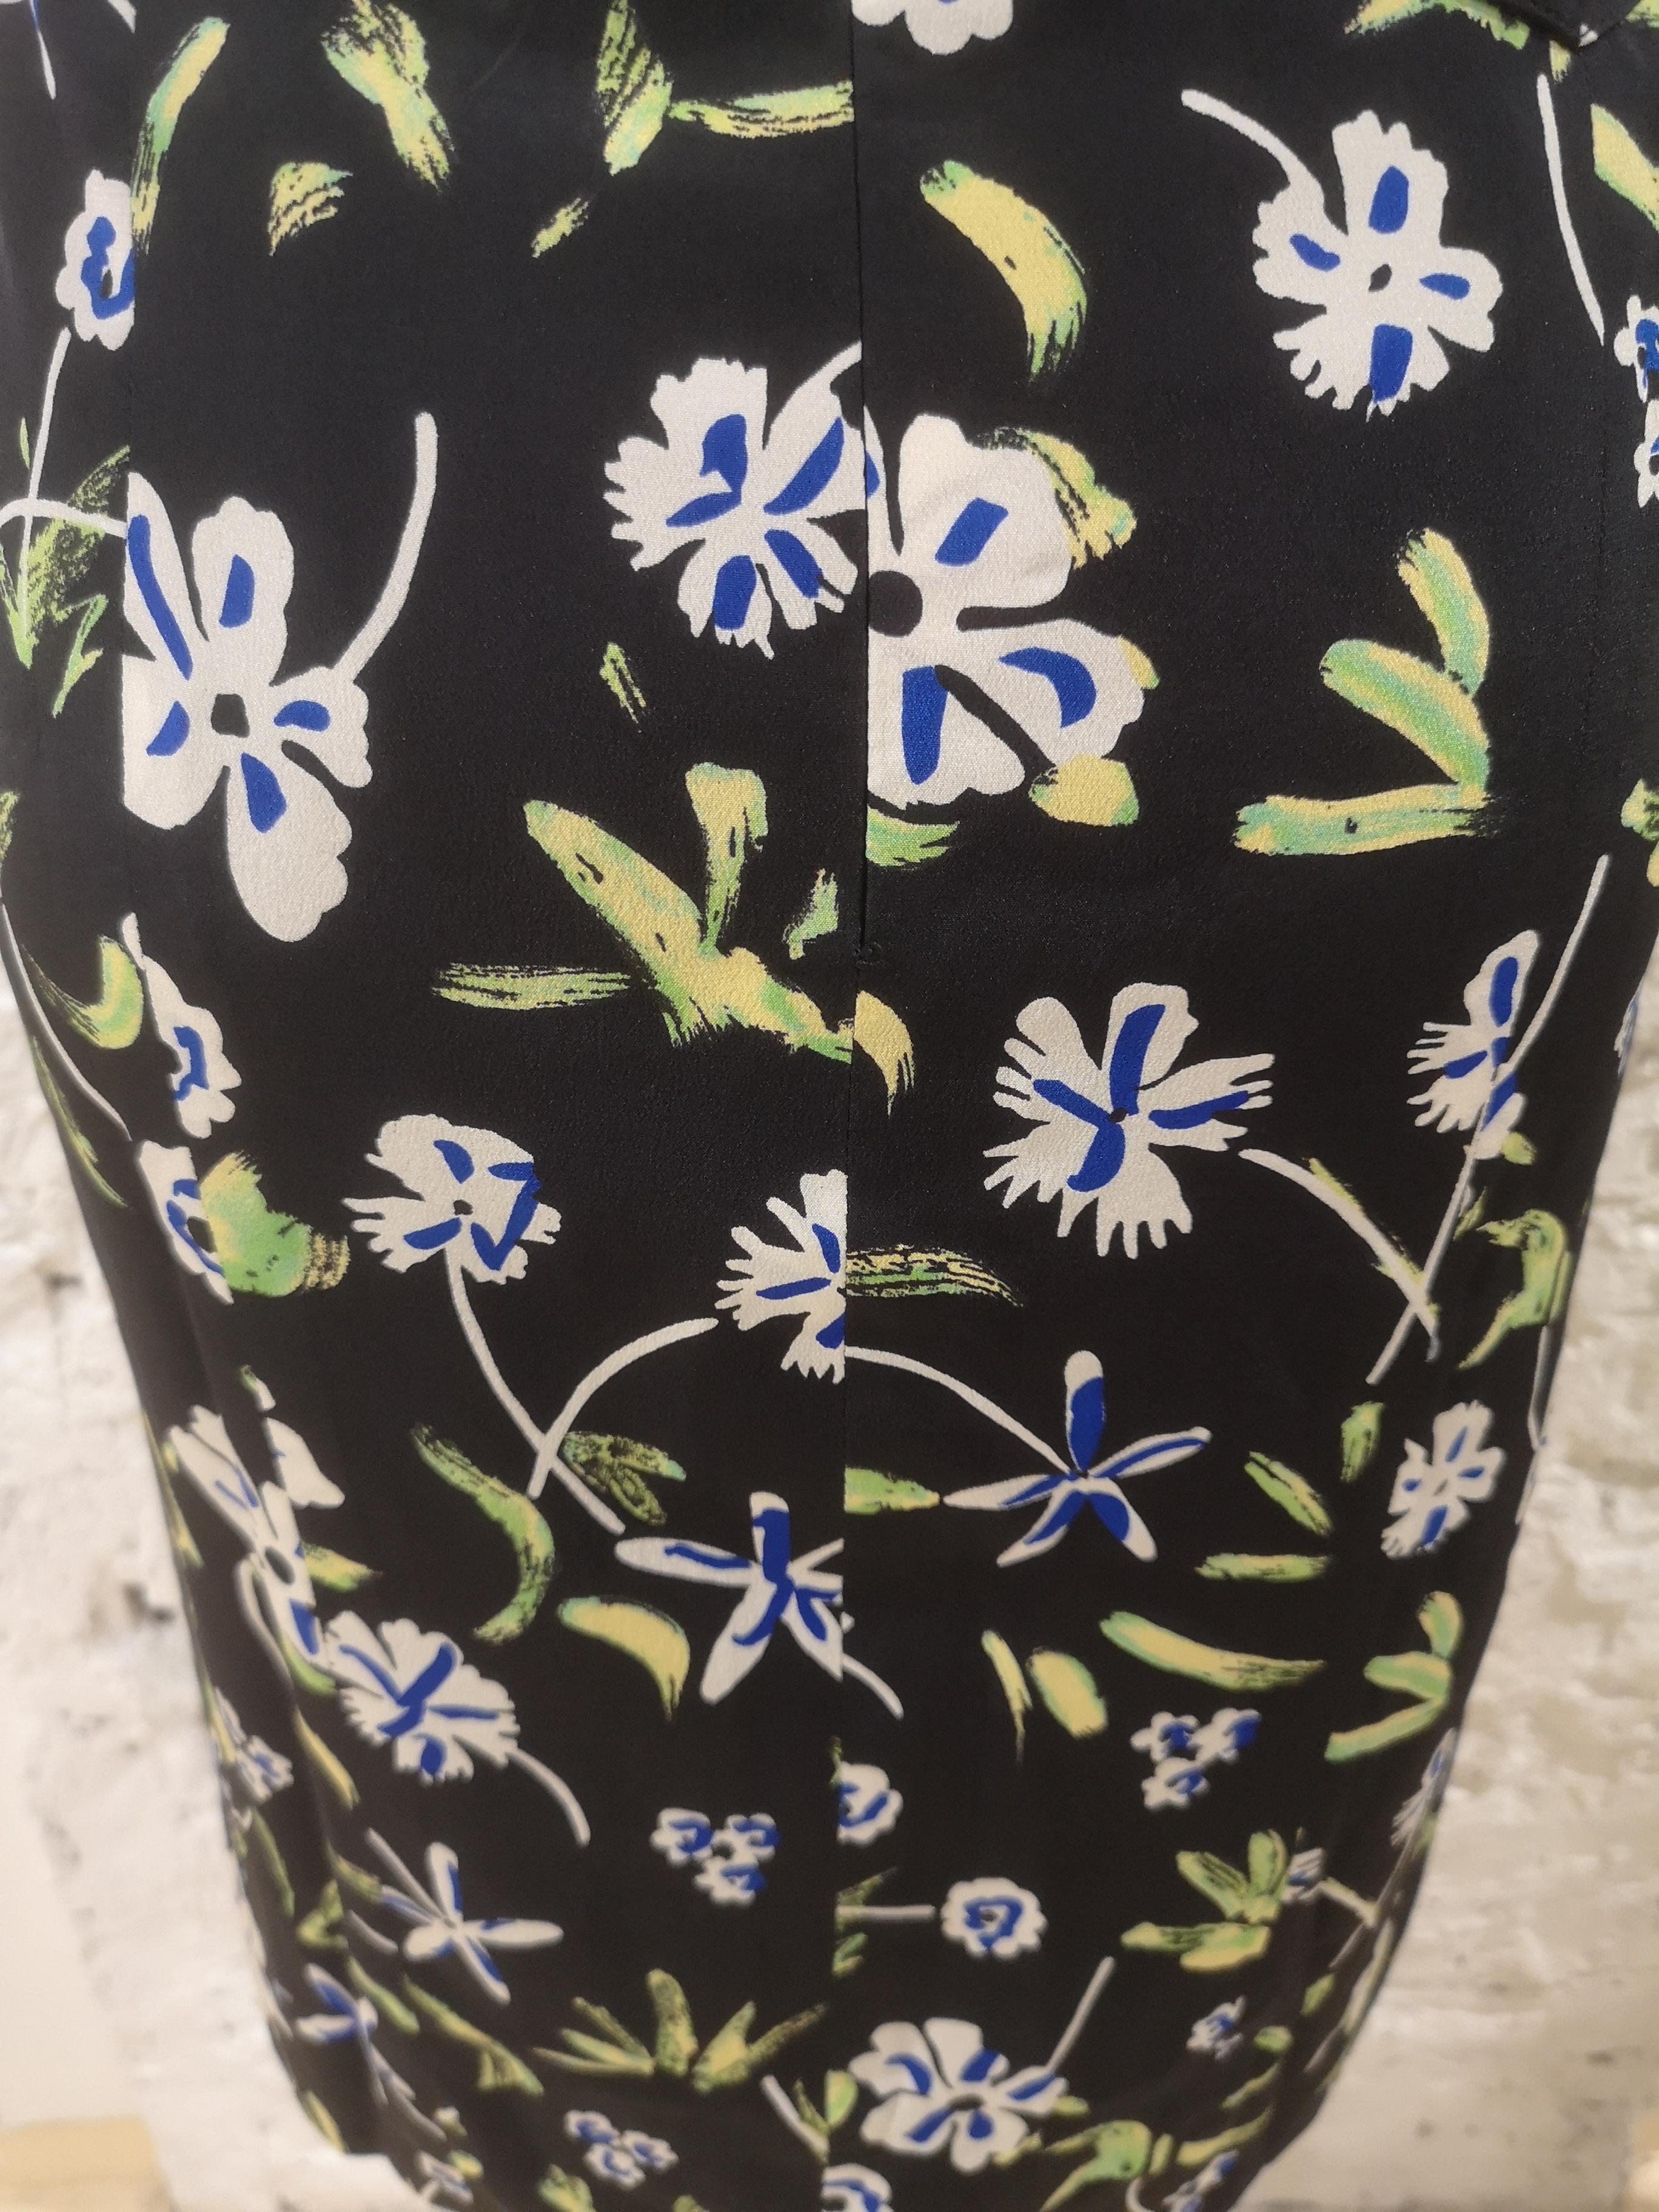 Chanel silk flower dress
Multicoloured dress in size 42 fr
total lenght 97 cm, shoulders 43 cm
